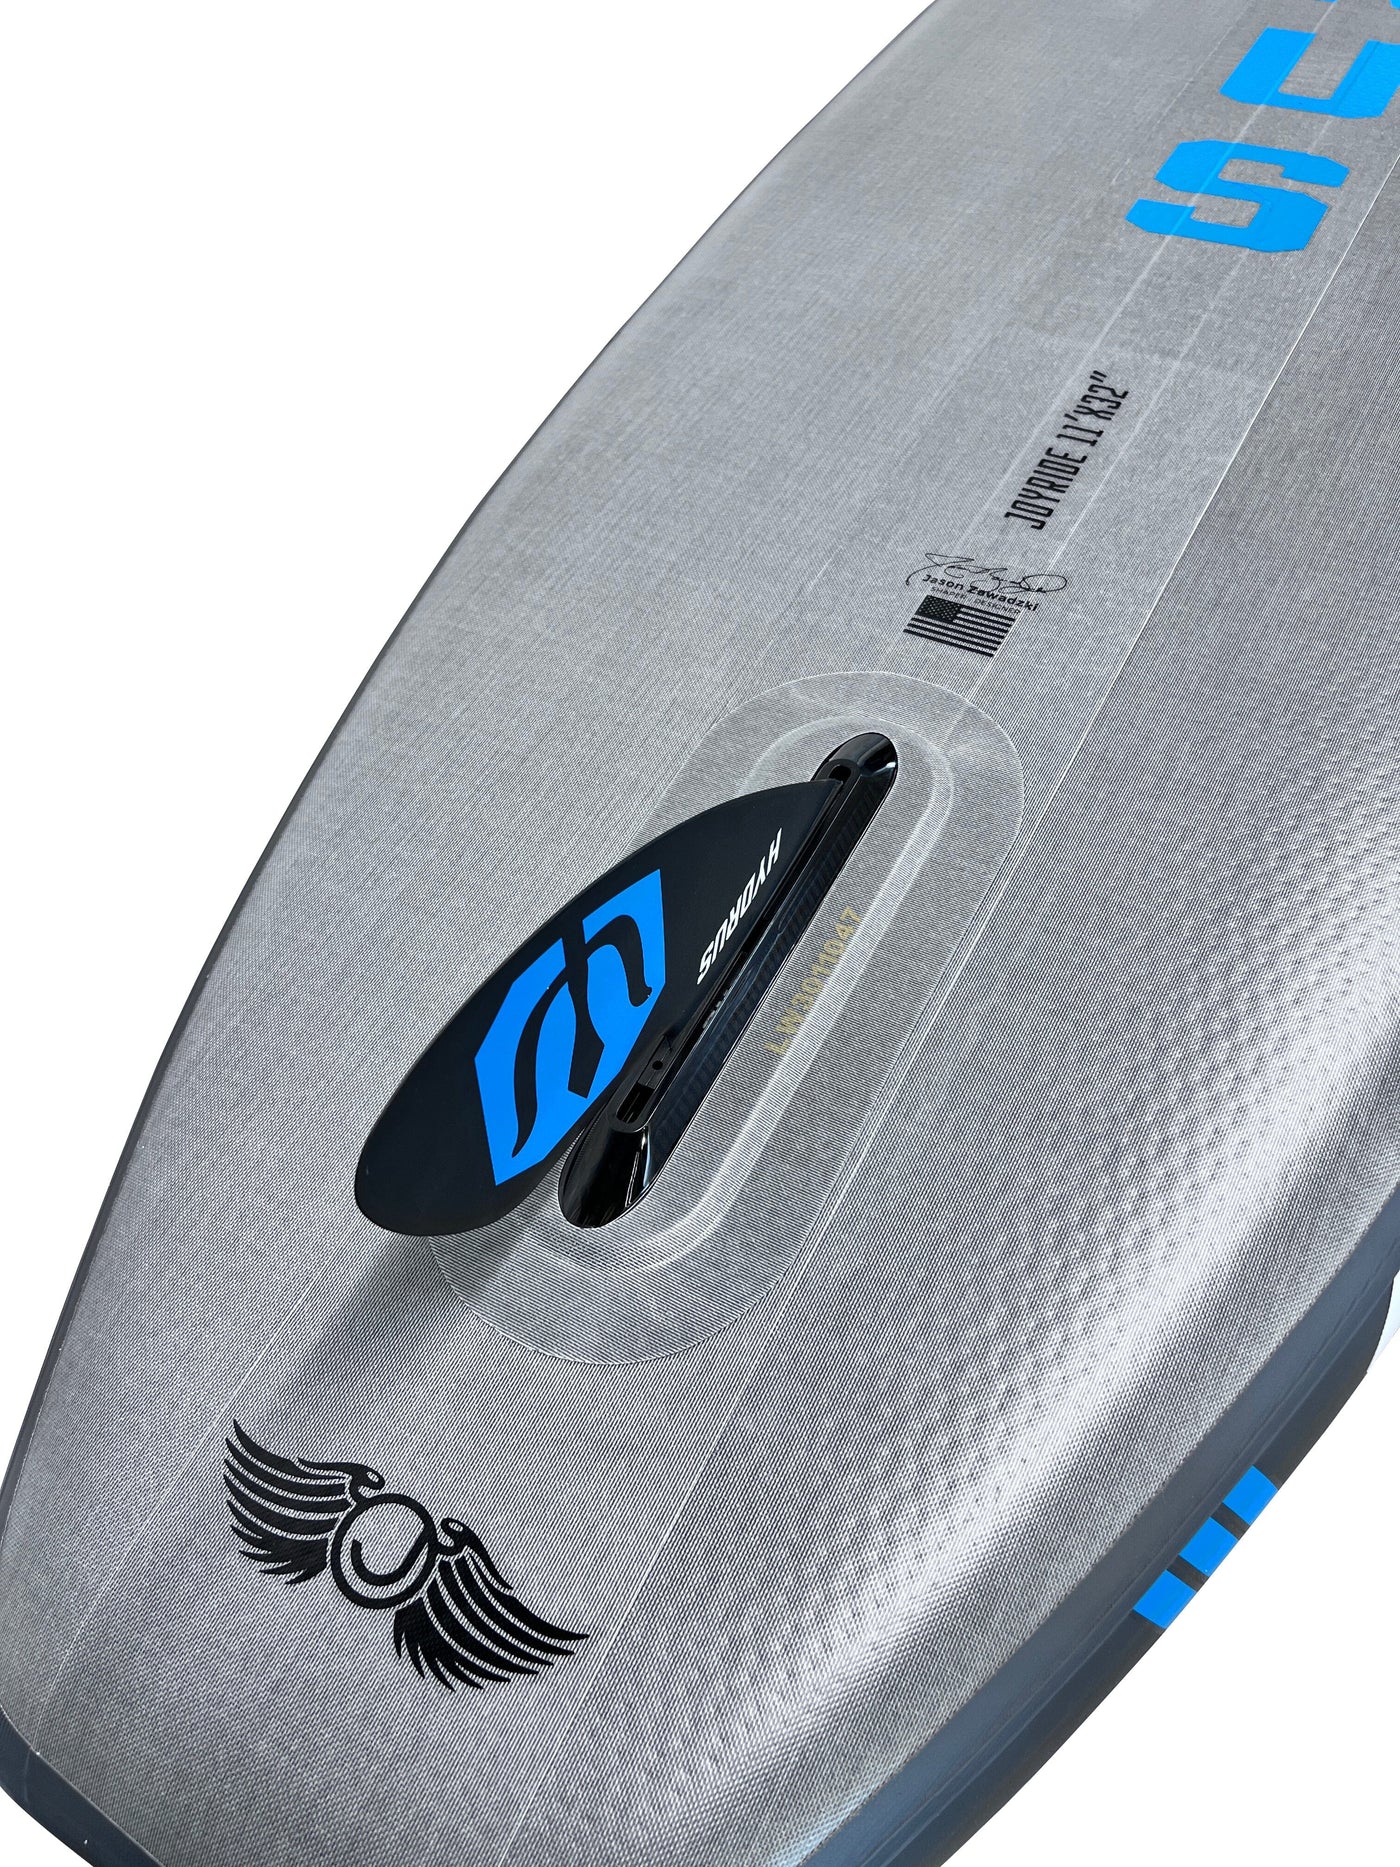 JoyRide All-Around Inflatable Paddleboard 